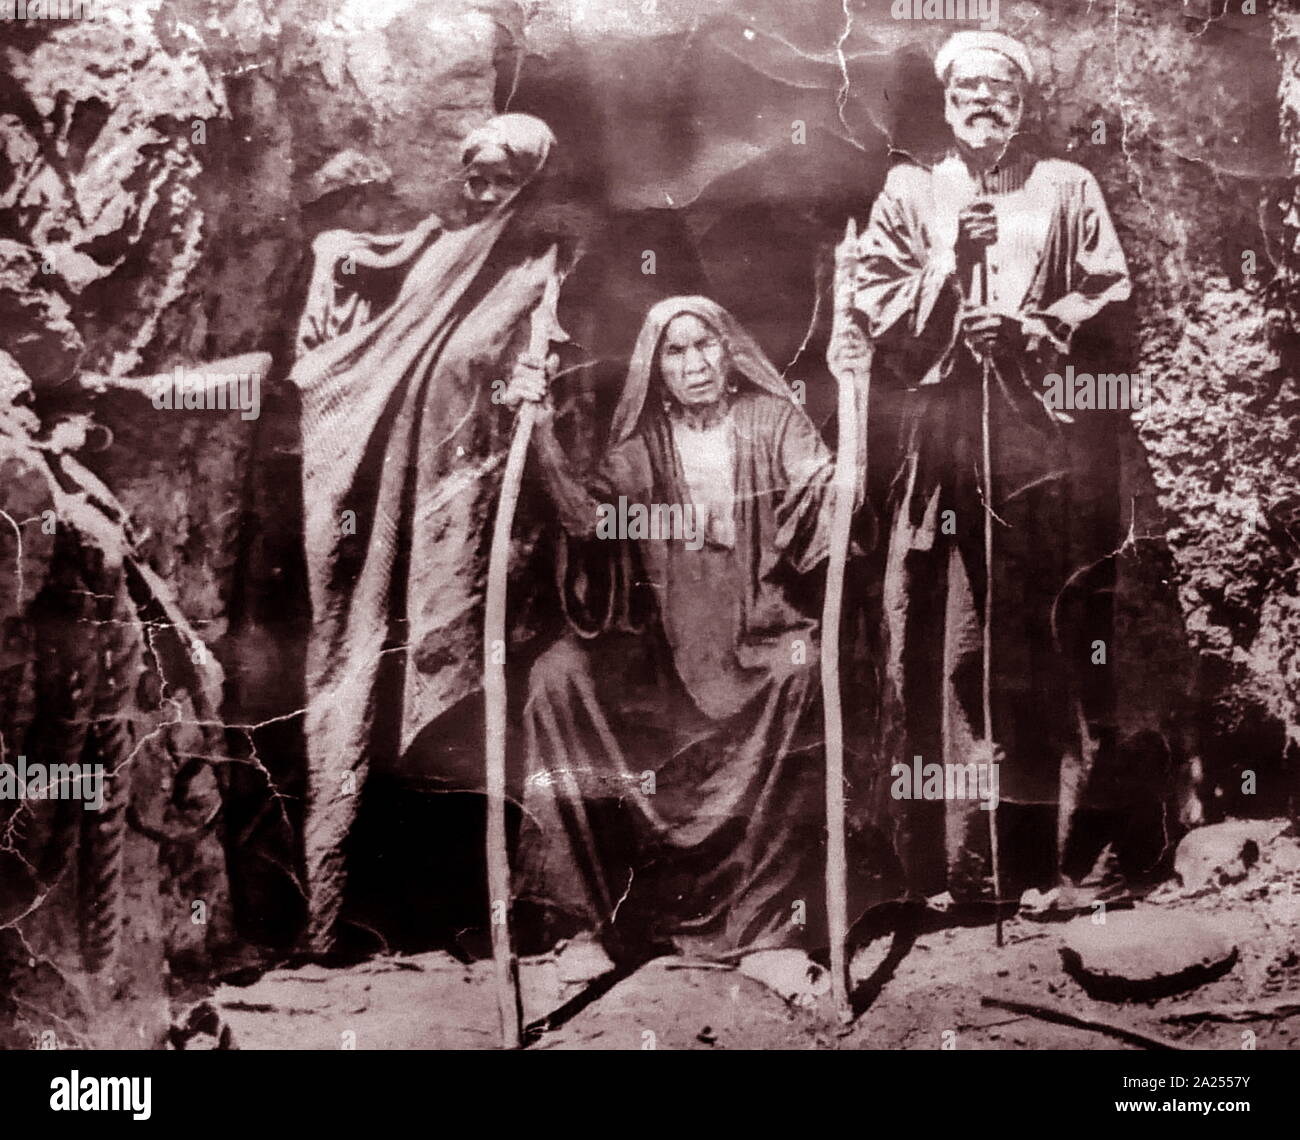 Abd Abdel Rassoul in 1942, Abdel- Rassoul and Howard Carter discovered Tutankhamen's tomb in 1922. Stock Photo